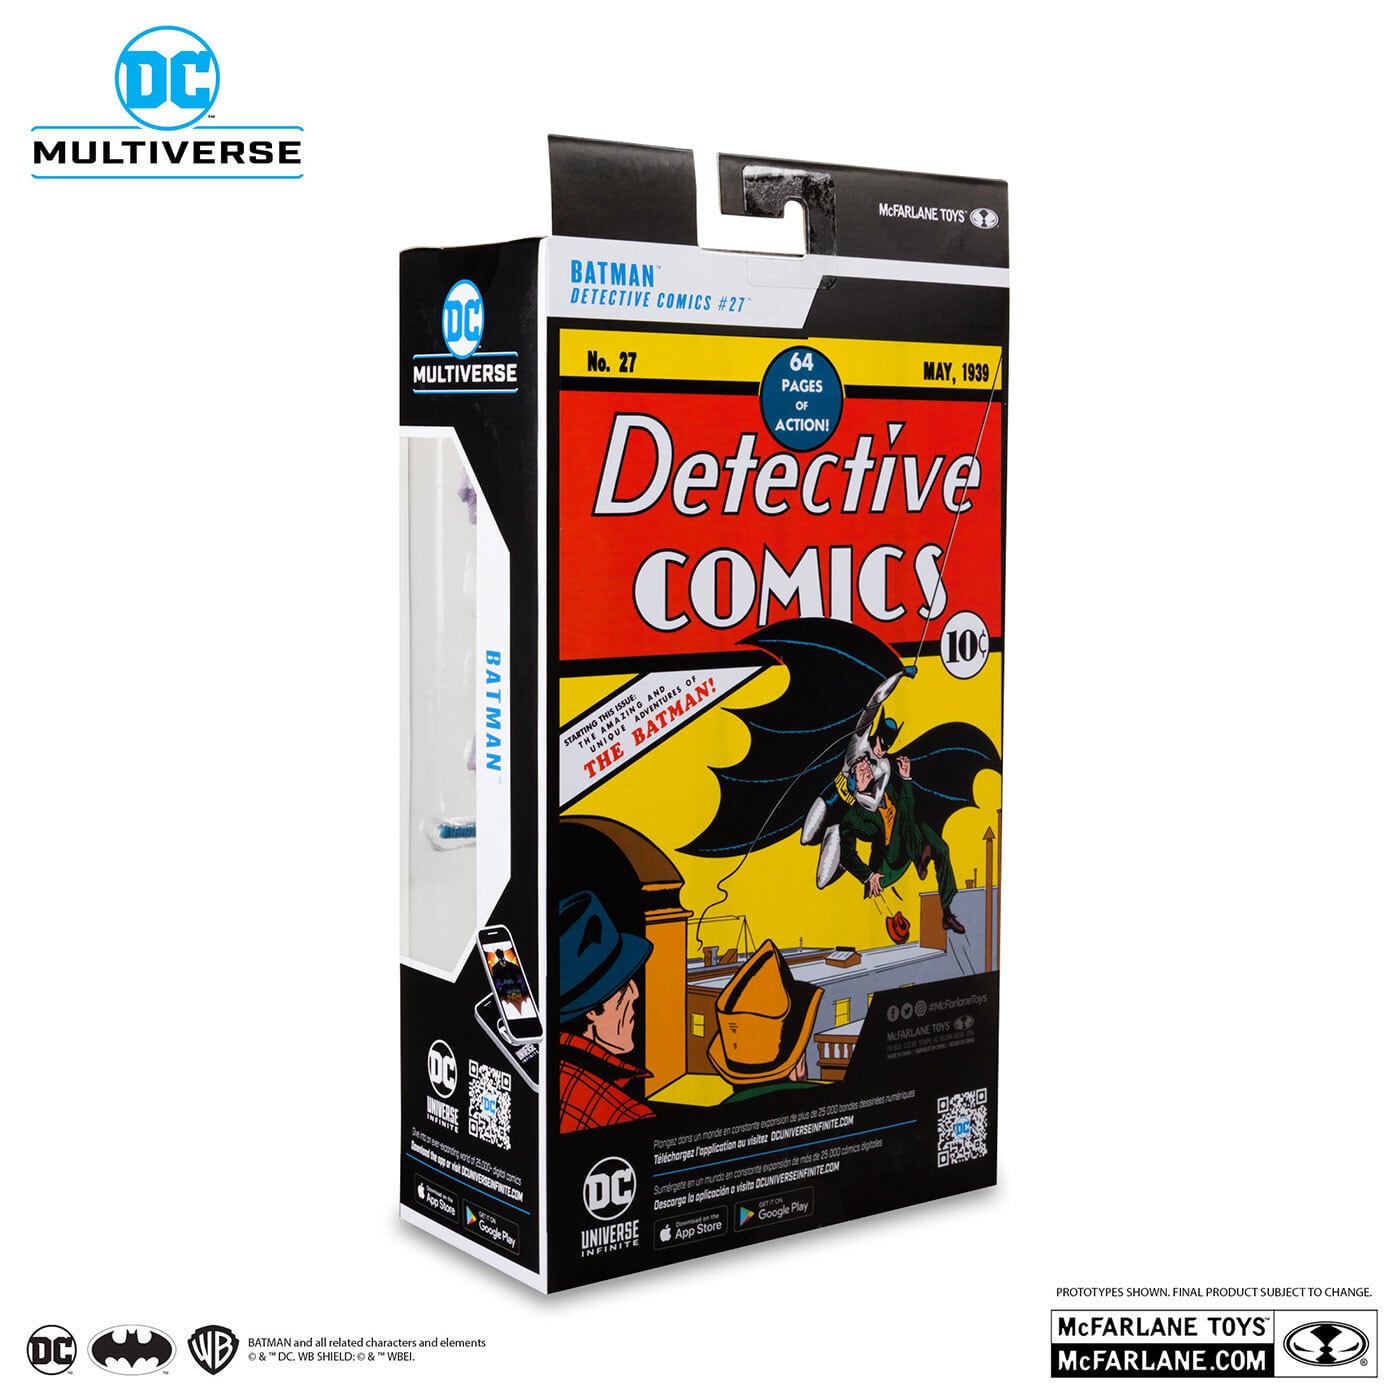 DC マルチバース #264 バットマン Detective Comics #27 7インチ アクションフィギュア 国内版 未開封